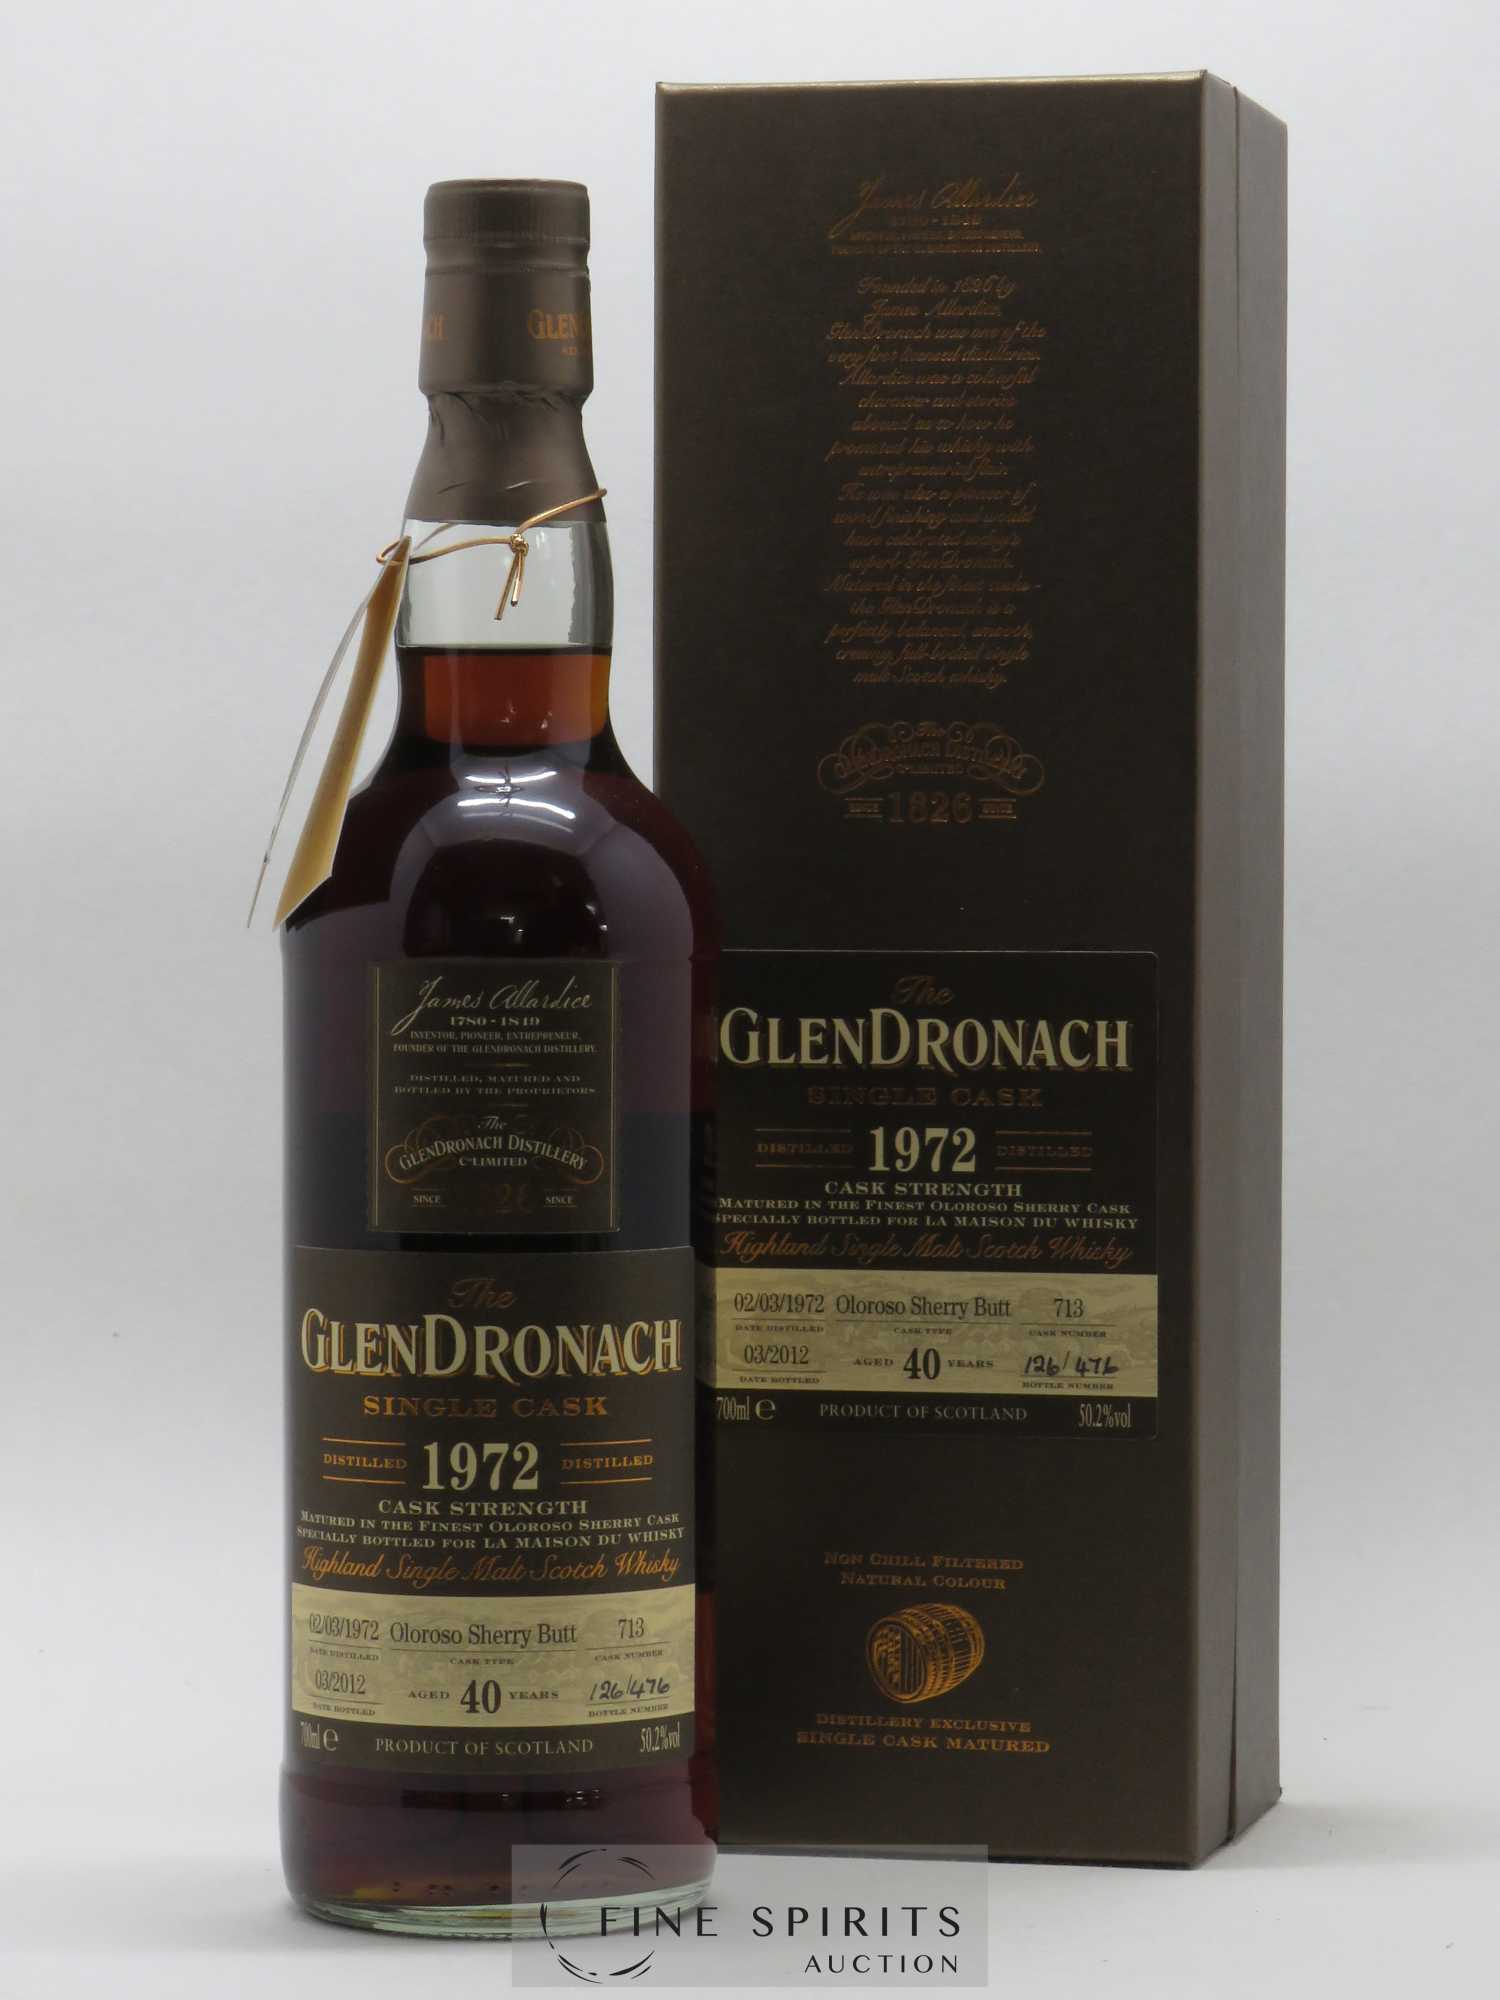 Glendronach 40 years 1972 Of. Single Oloroso Sherry Butt n°713 - bottled 2012 